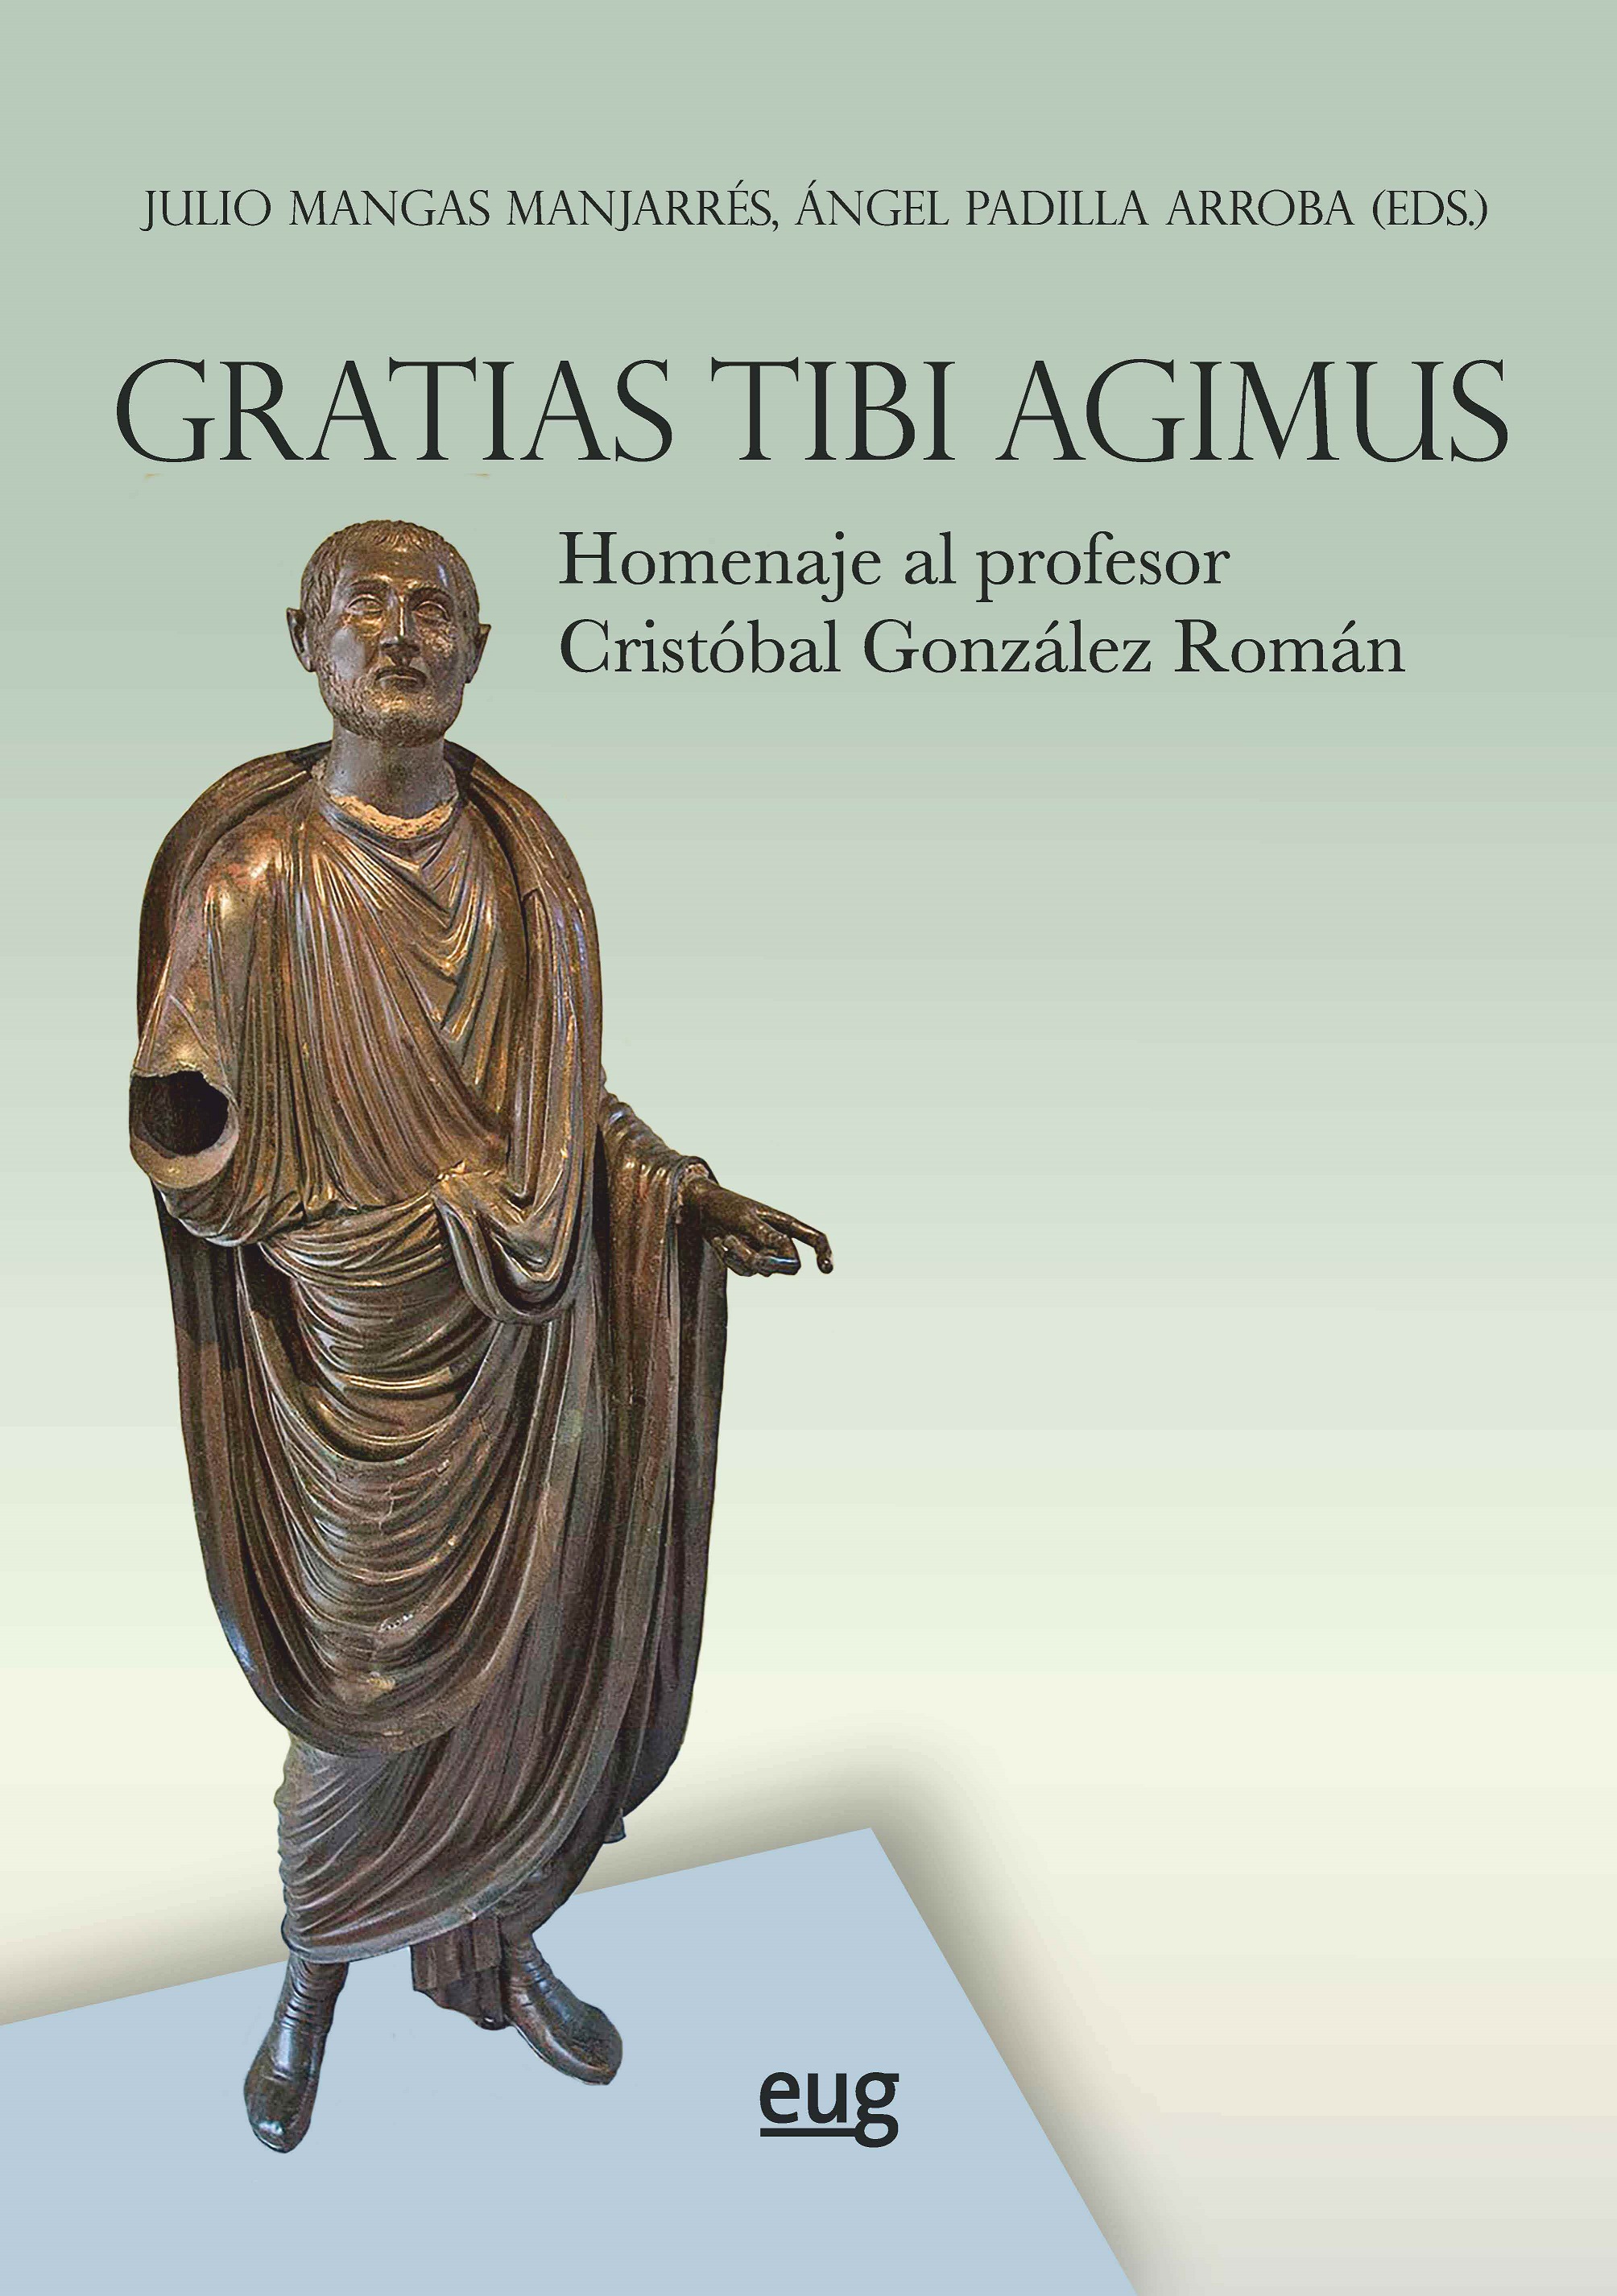 Imagen de portada del libro Gratias tibi agimus